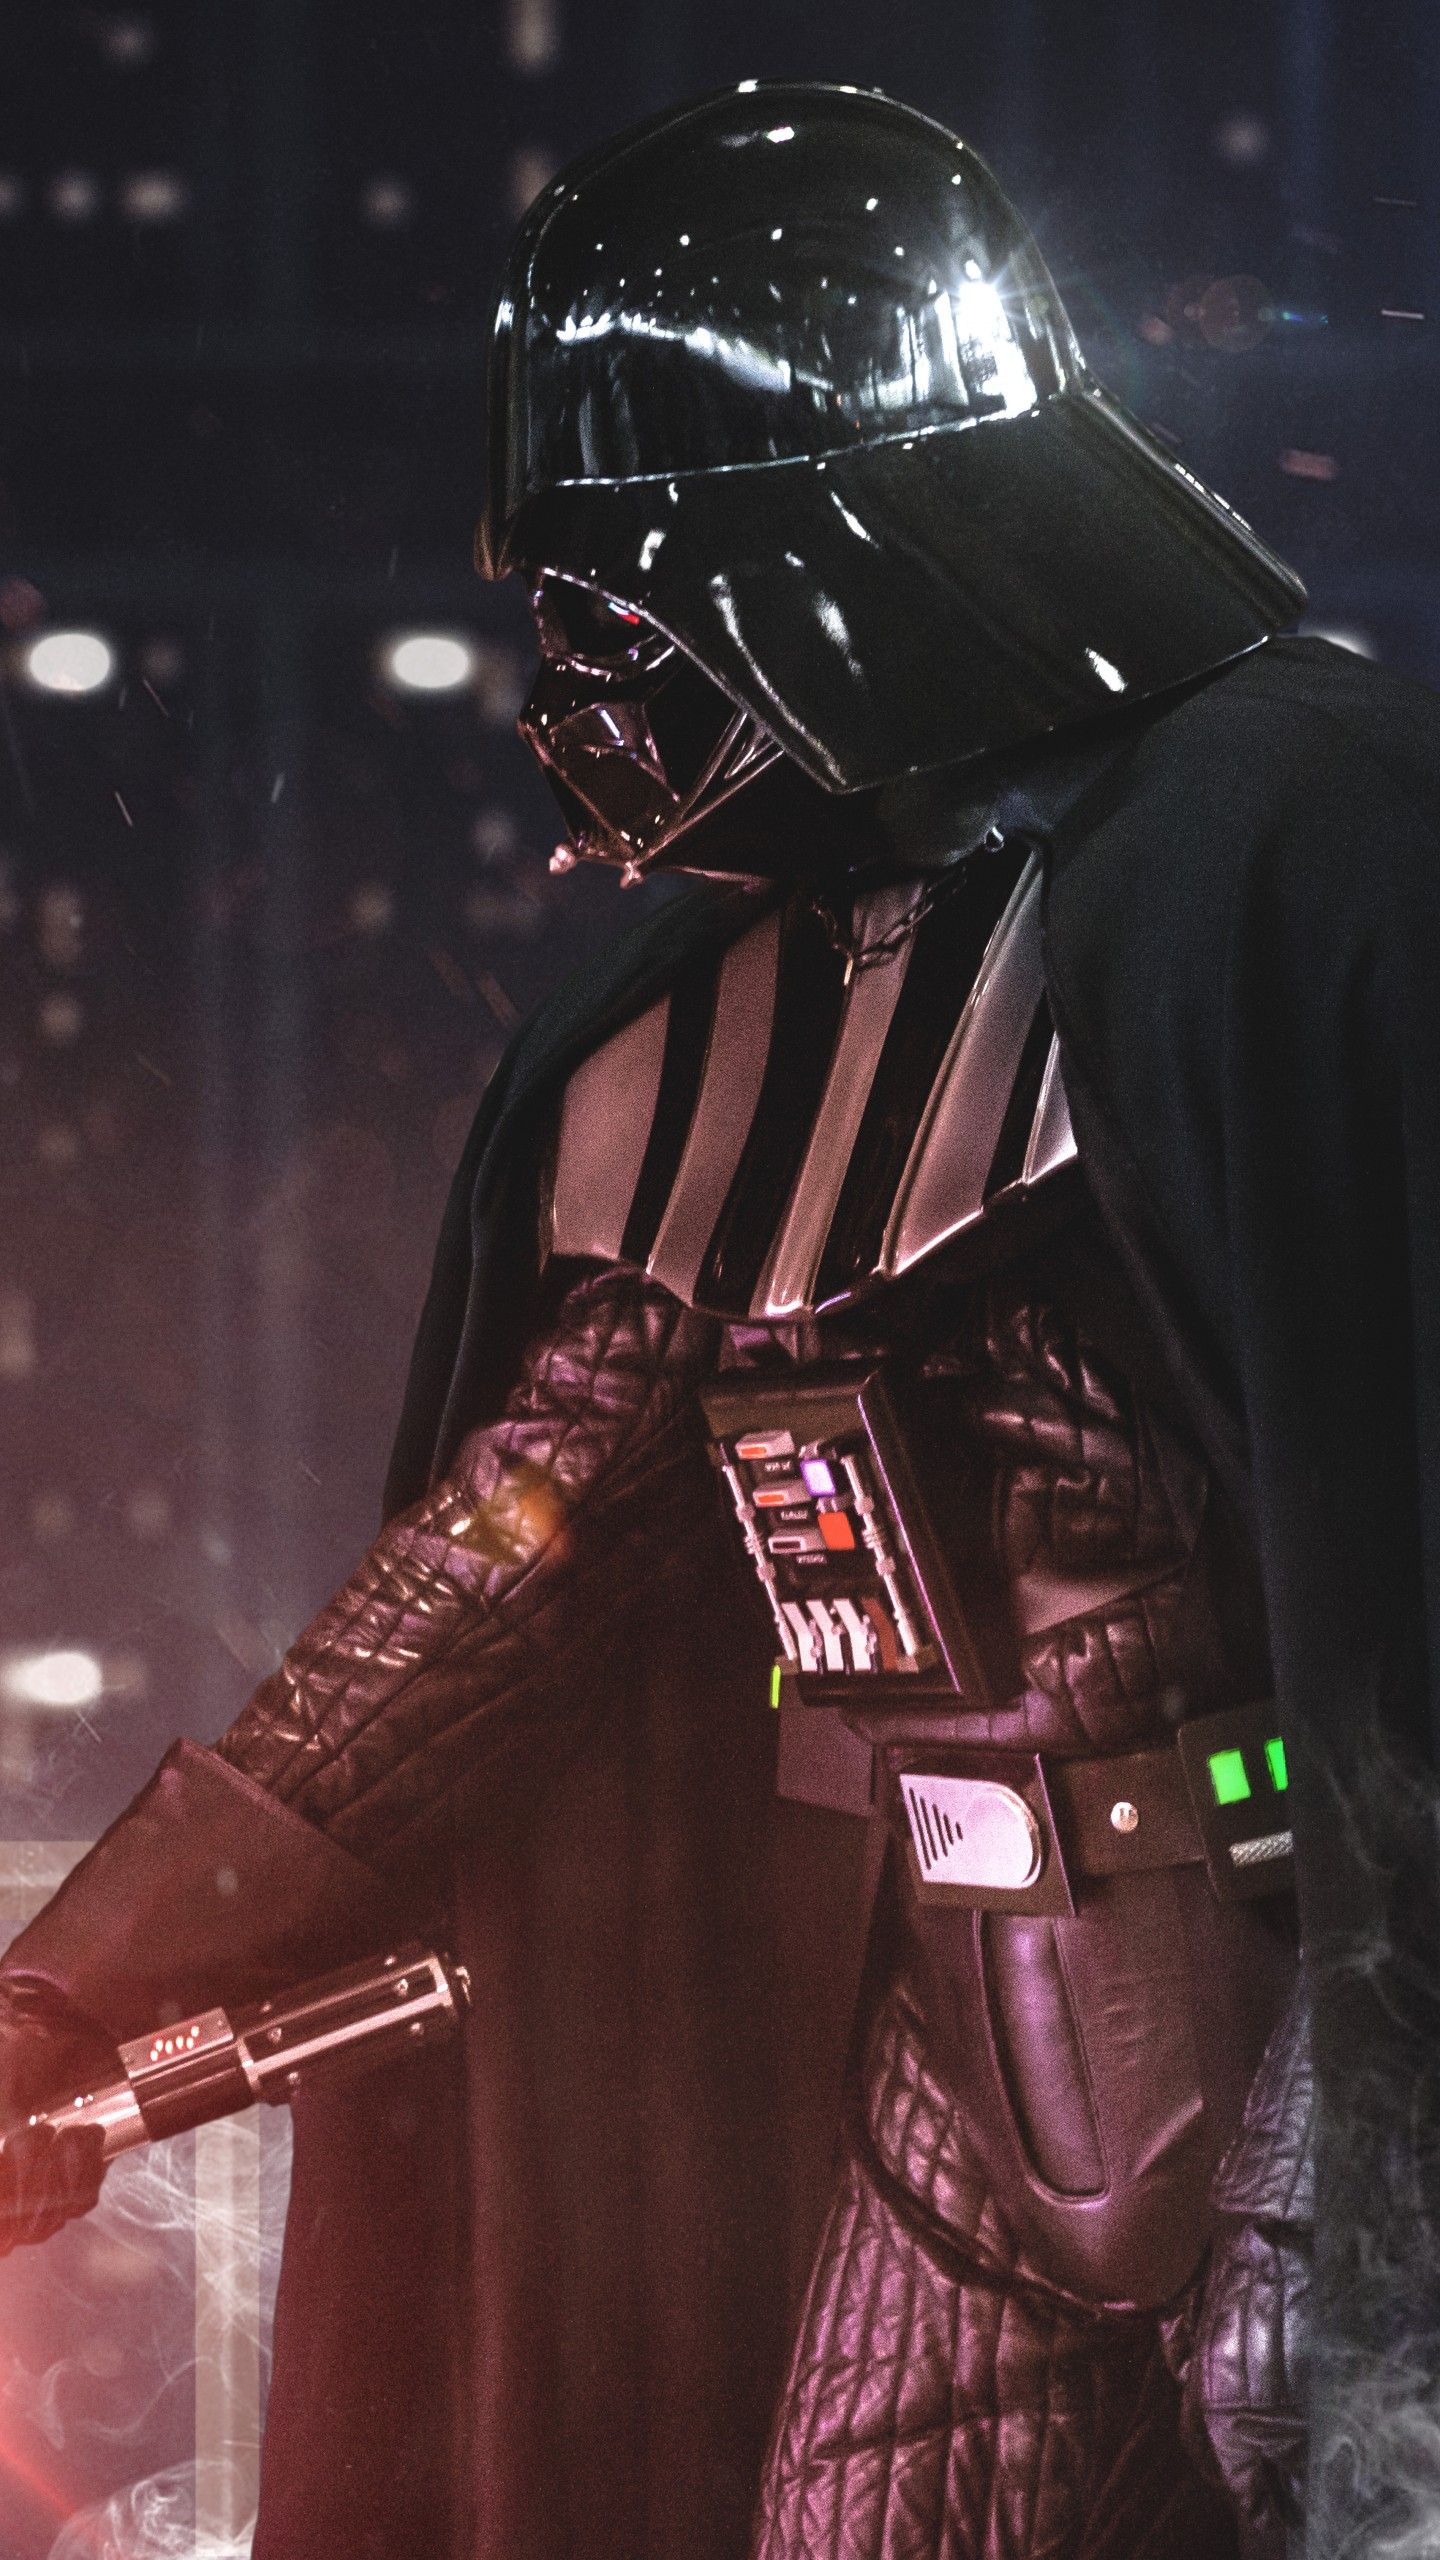 Darth Vader iPhone Wallpaper HD